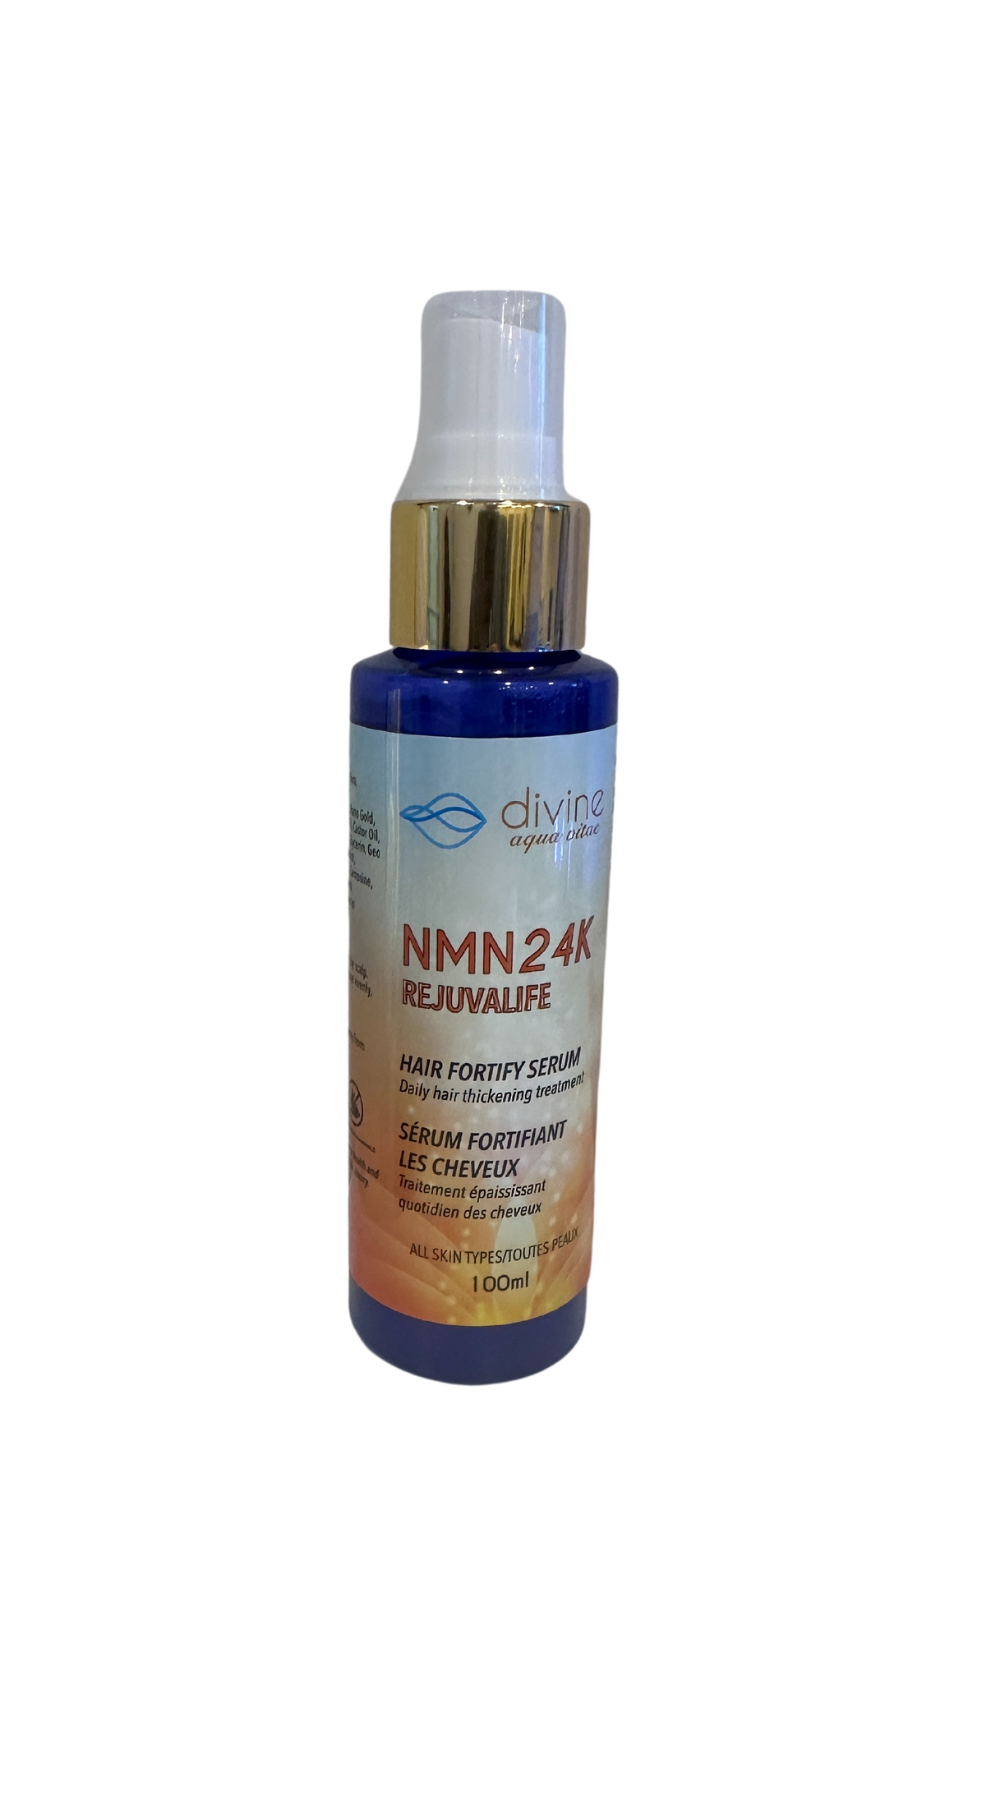 NMN 24K Rejuvalife Hair Fortify Serum